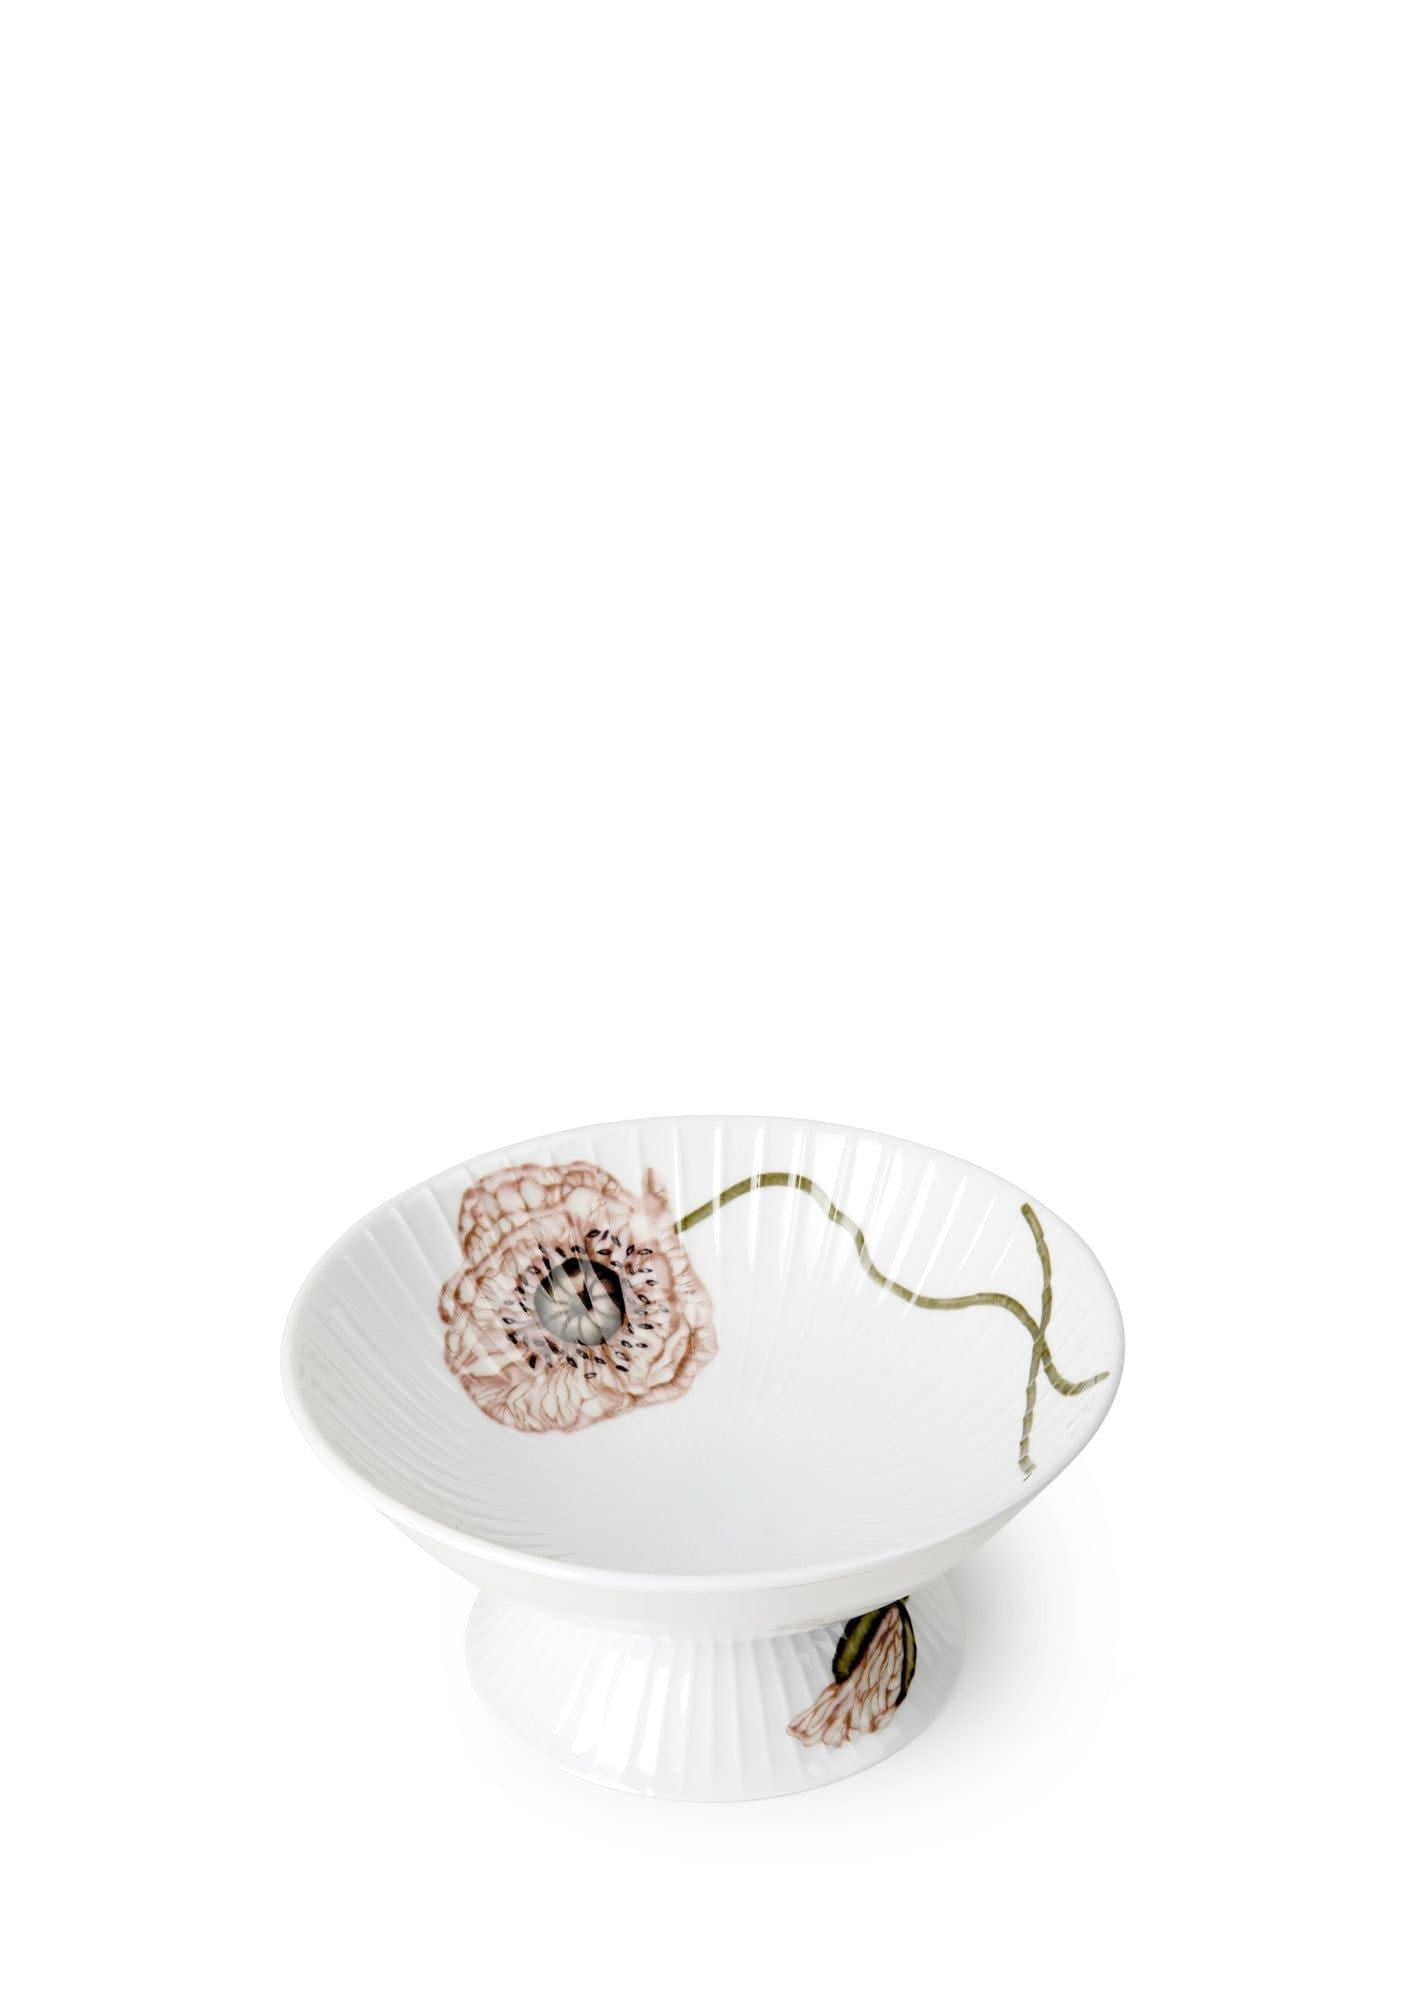 Kähler Hammershøi Poppy Bowl On Foot ø16 Cm, White With Decoration